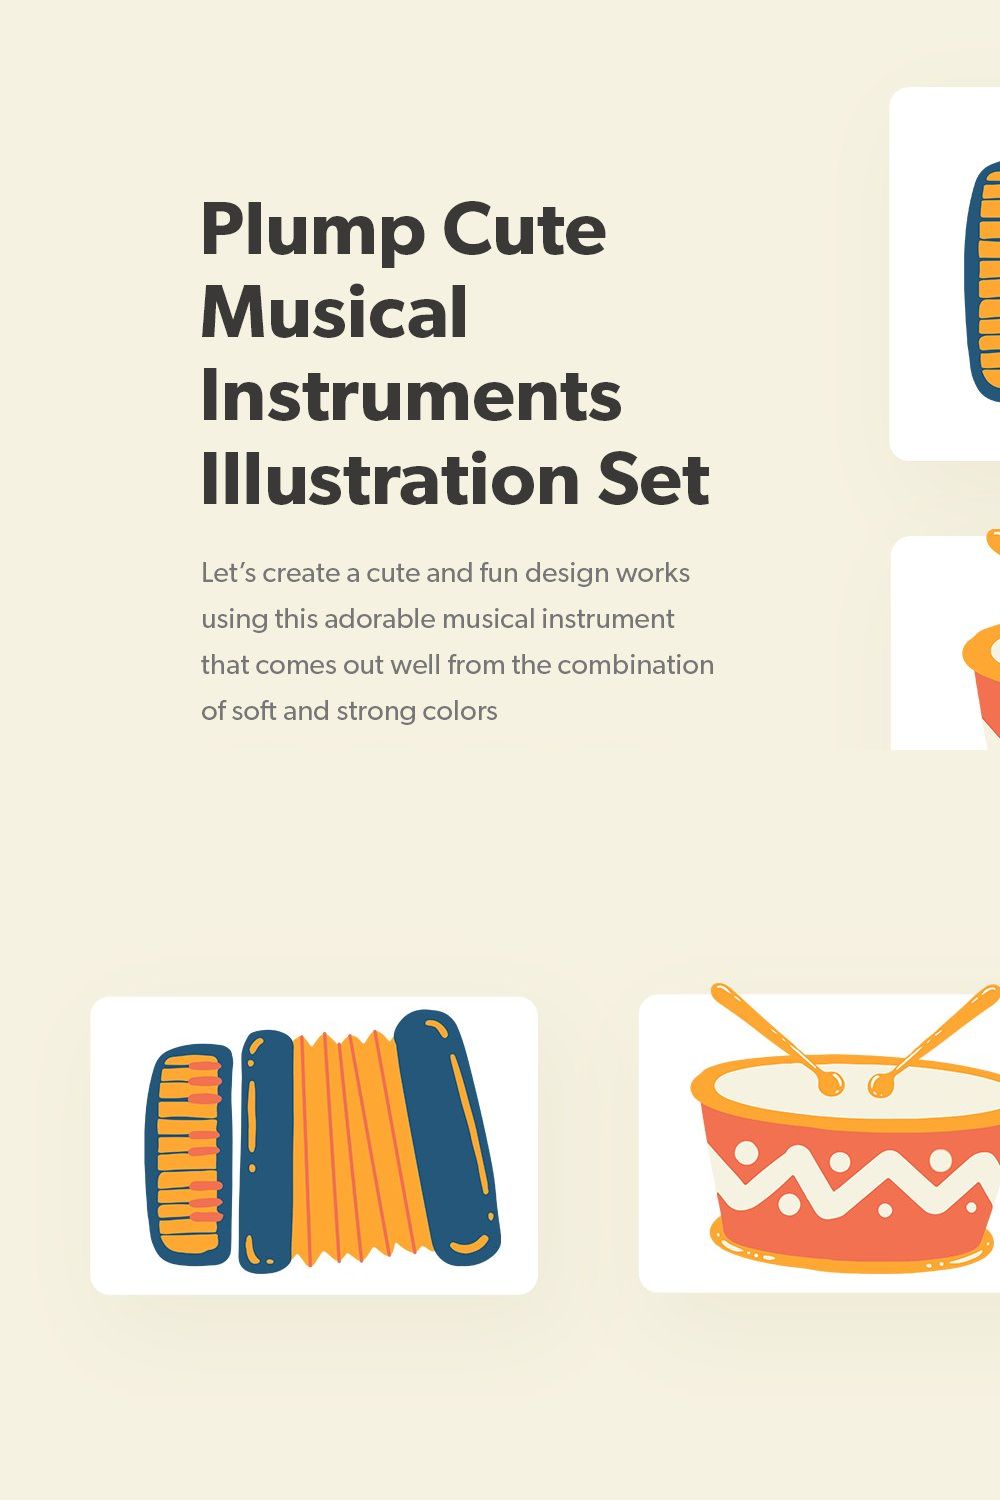 Musical Instruments Illustration Set pinterest preview image.